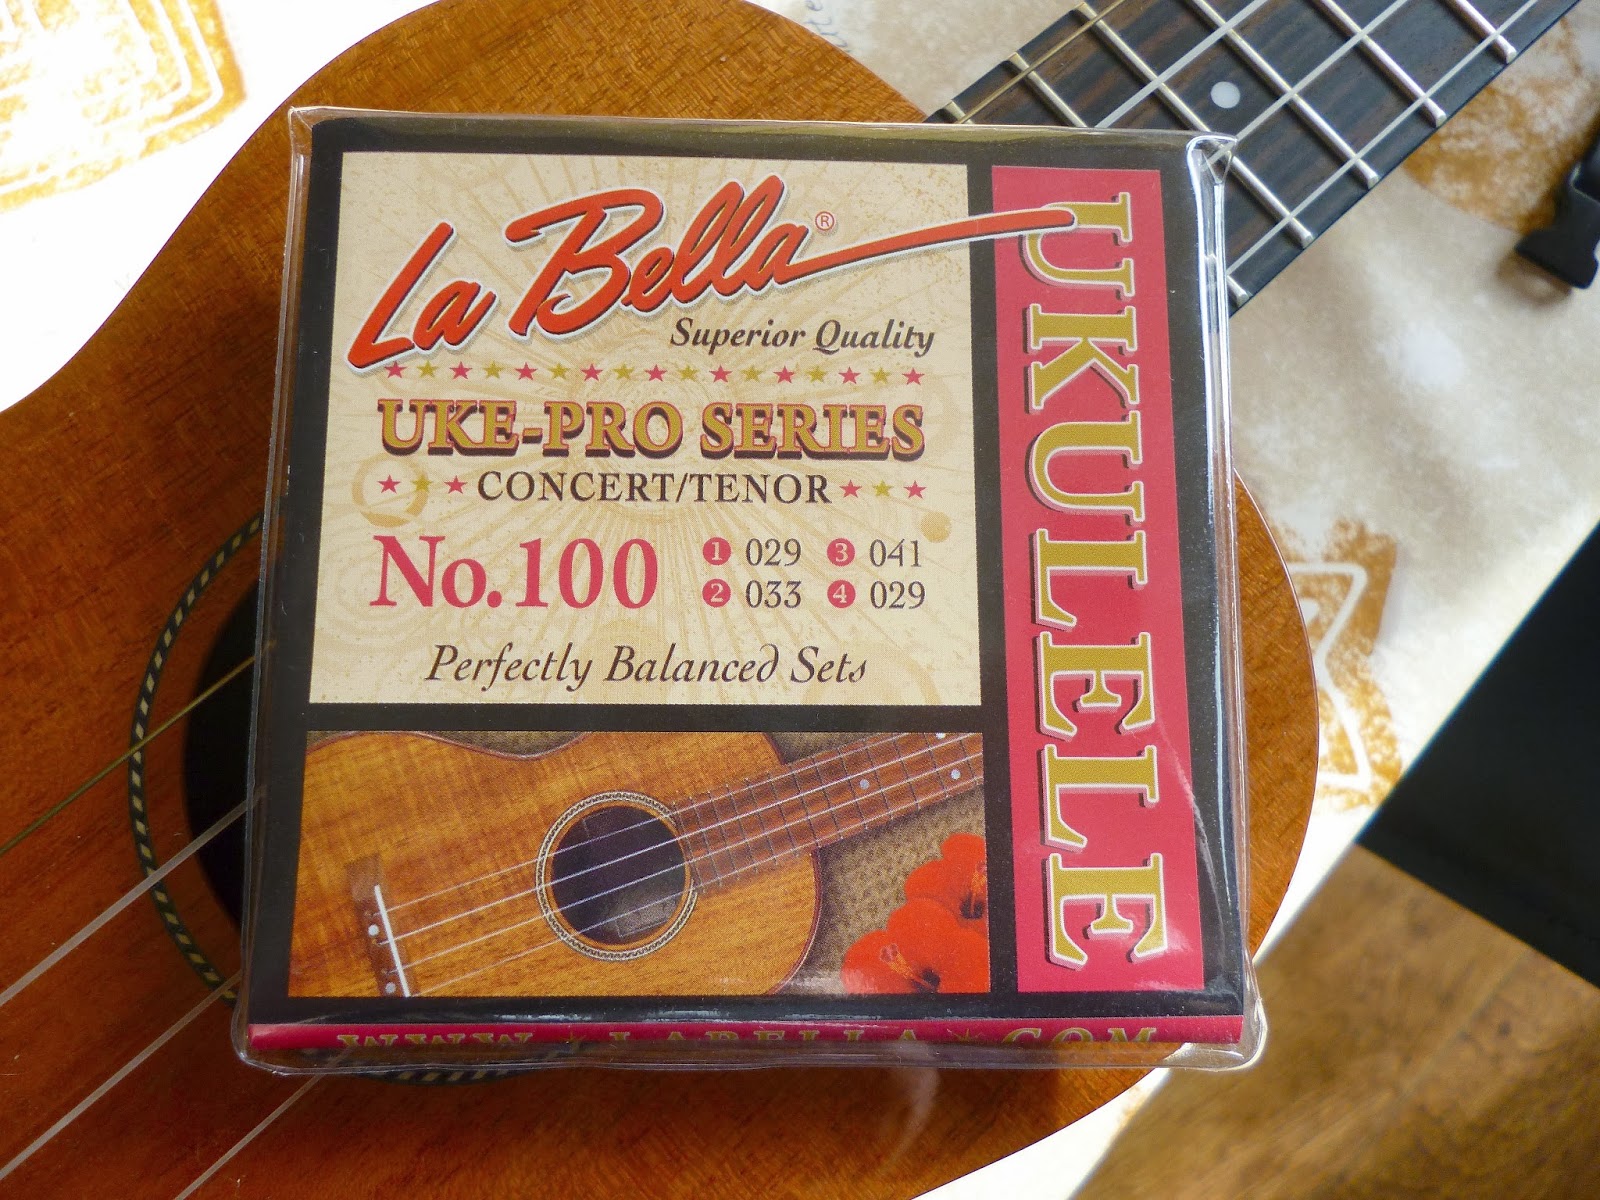 La Bella Uke-Pro Series ukulele strings - REVIEW